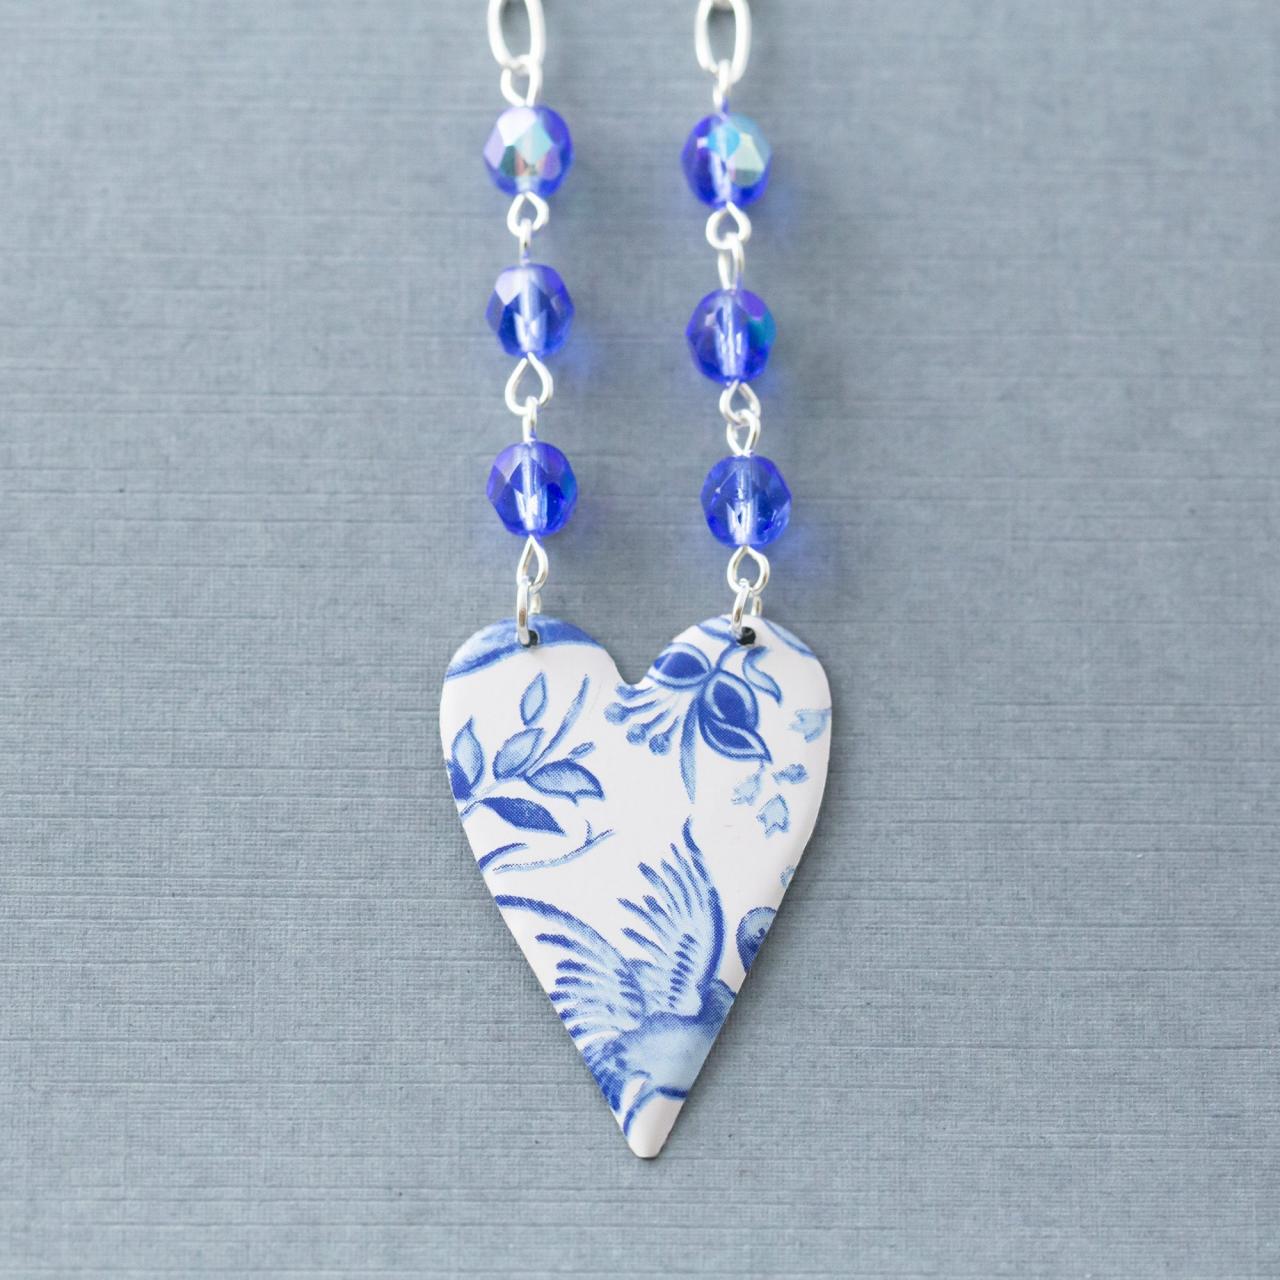 Tin Heart Necklace, Cobalt Blue Necklace, Blue Bird Necklace, Delft Jewelry, Heart Jewelry, Anniversary Gift